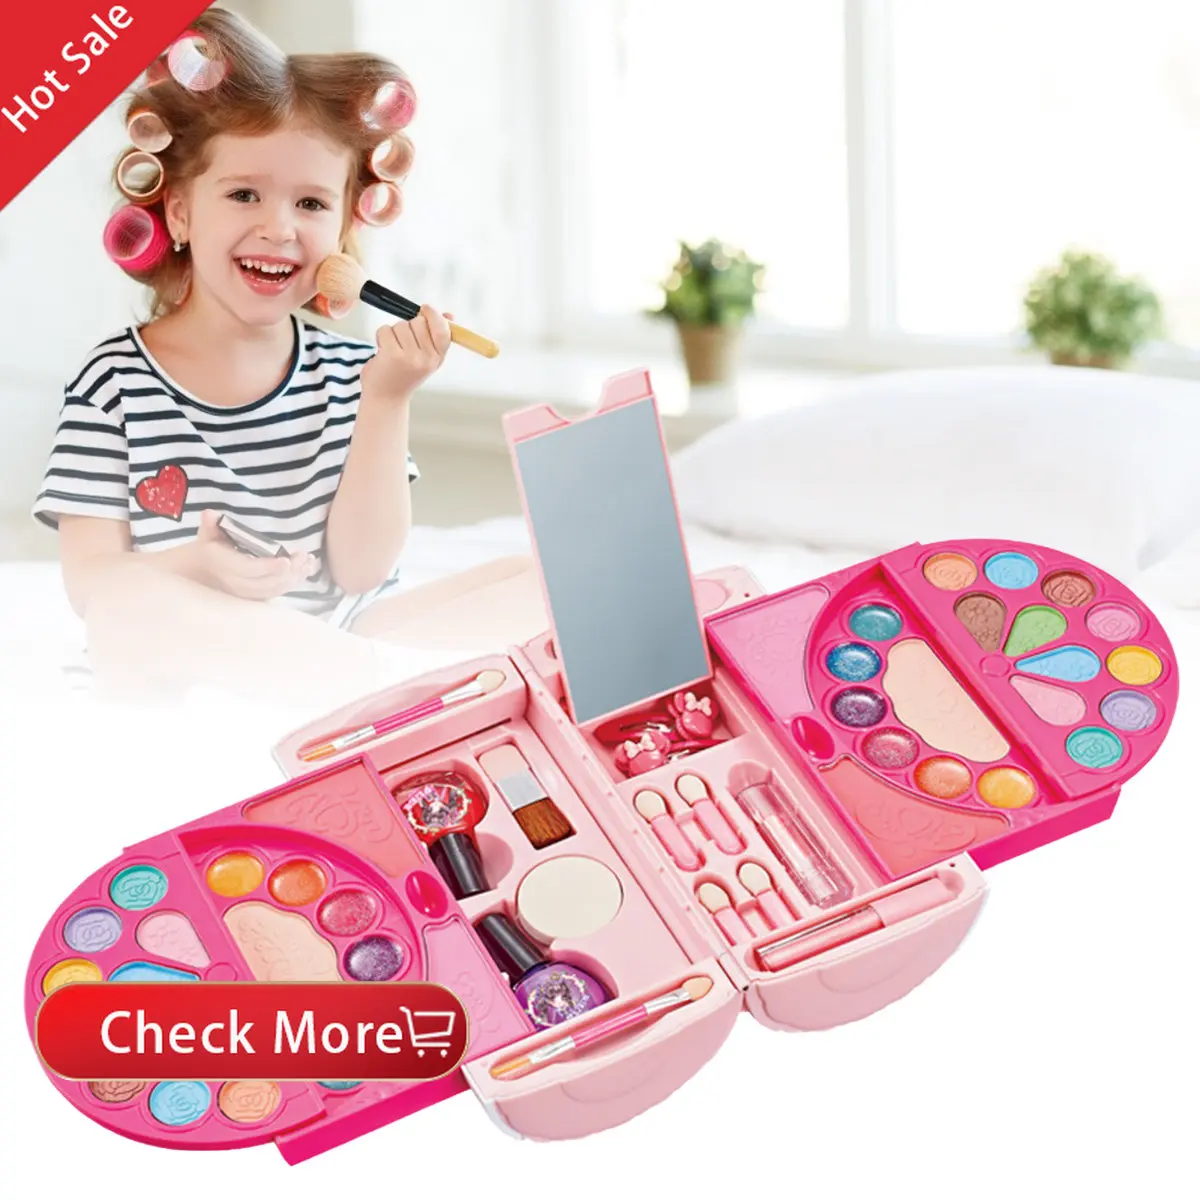 Kit de maquillaje portátil para niñas, Kit de maquillaje lavable, juguetes  de maquillaje para niños, juguetes de regalo de Navidad|Juguetes de belleza  y moda| - AliExpress